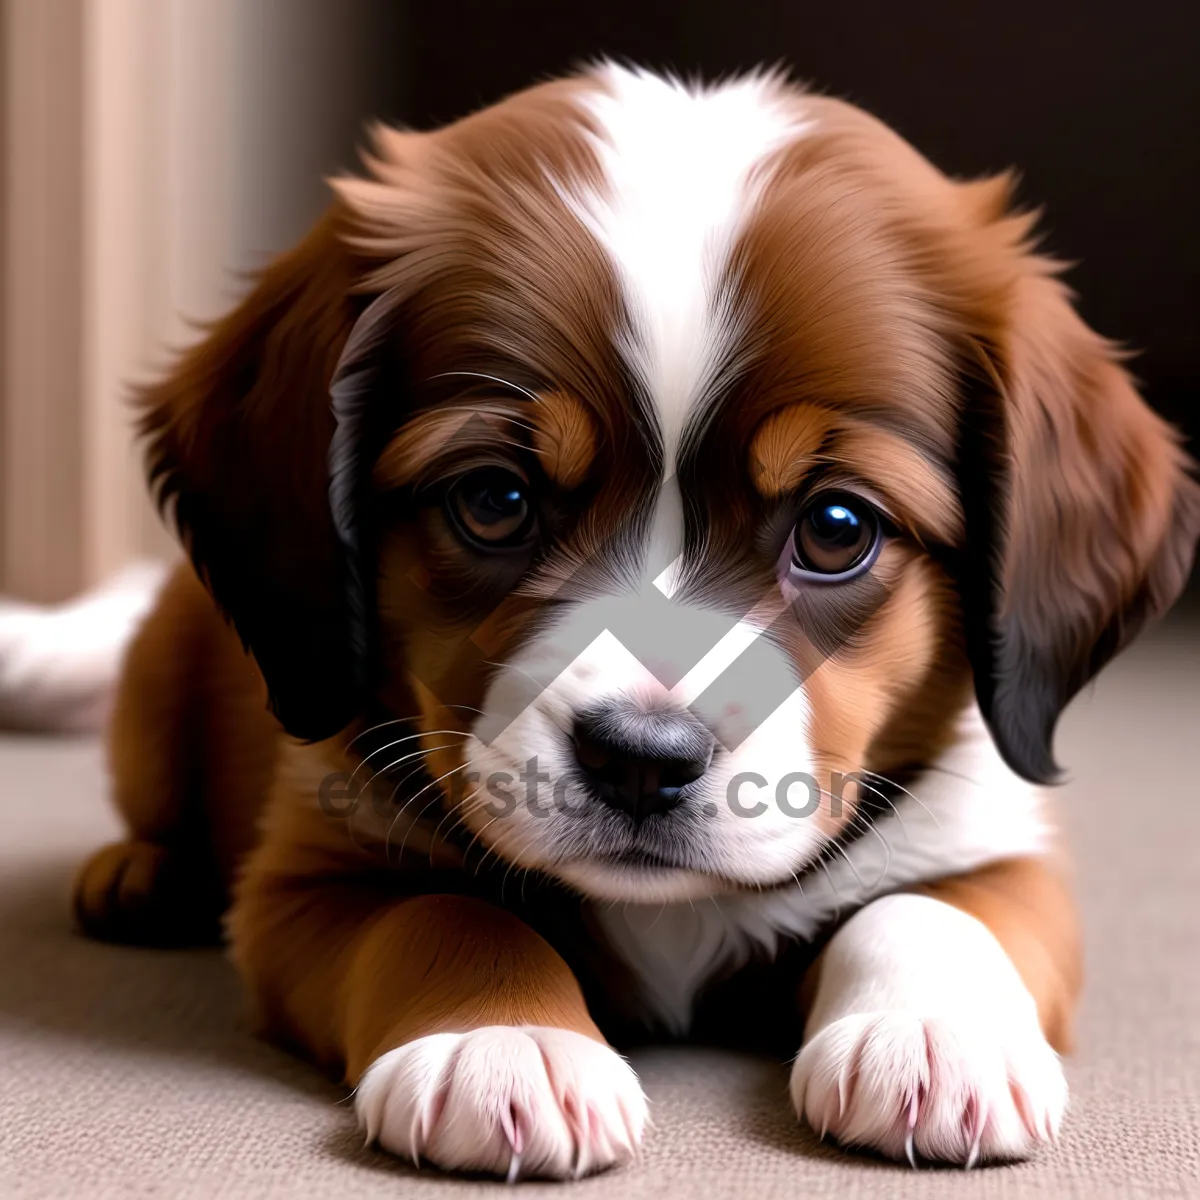 Picture of Cute Toy Spaniel Puppy - Adorable Fur Companion Portrait